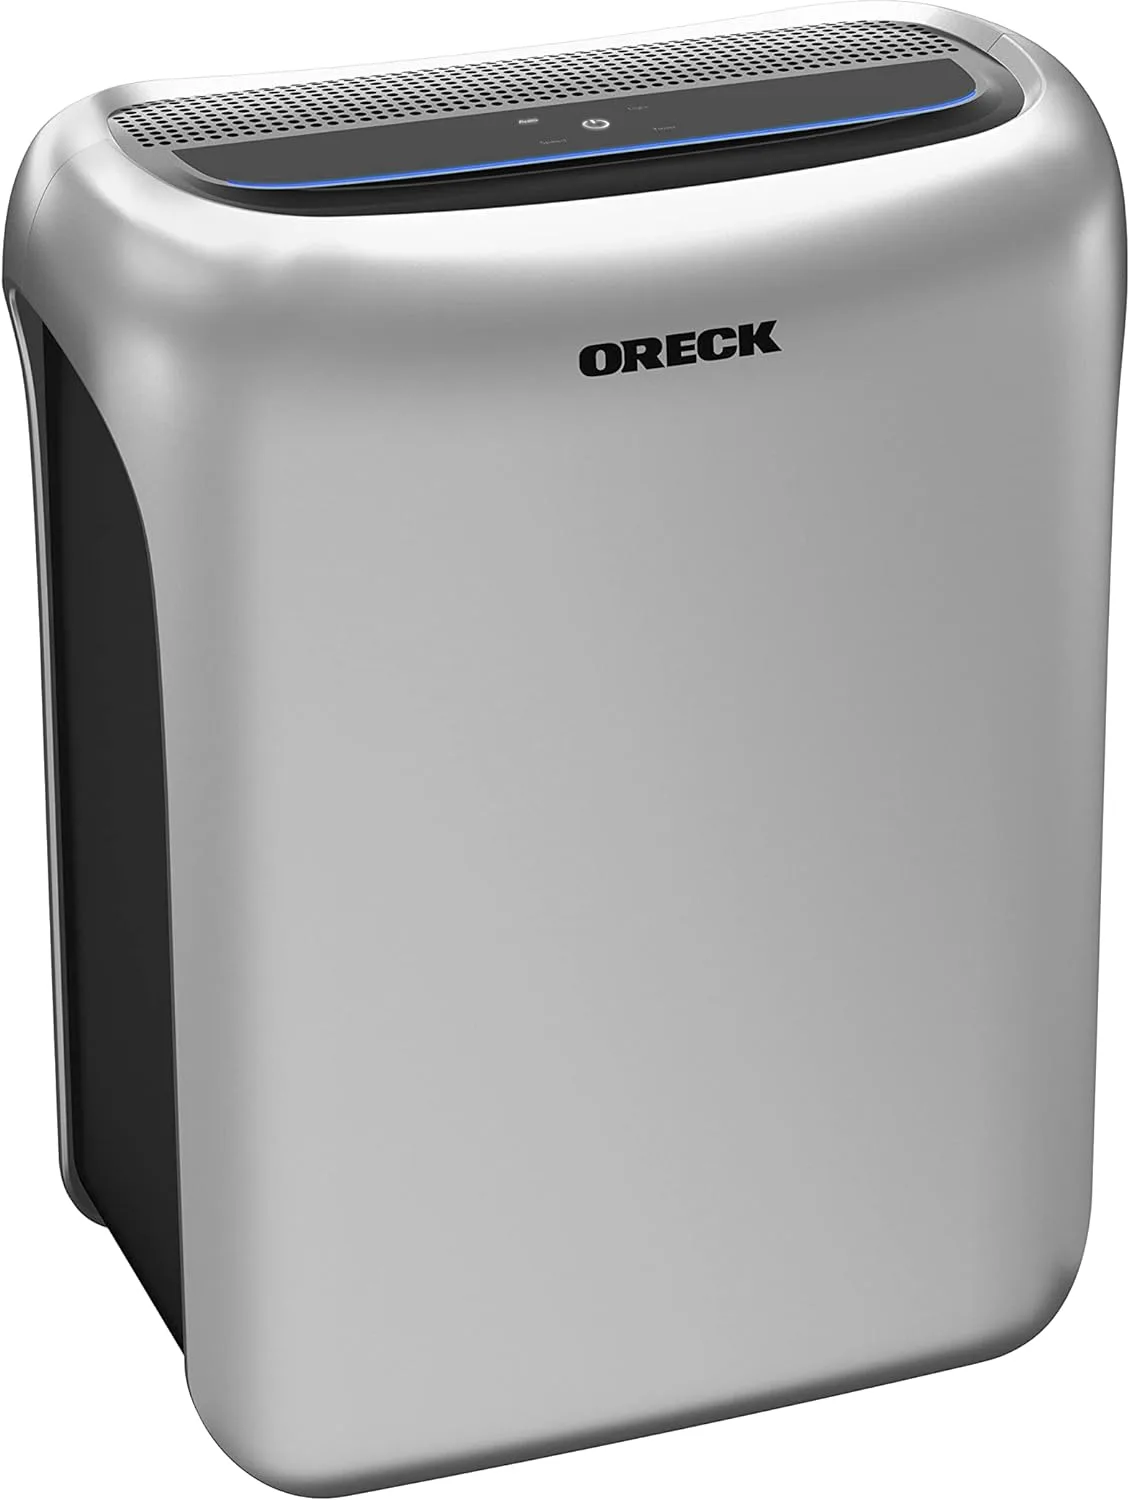 Oreck air purifier review